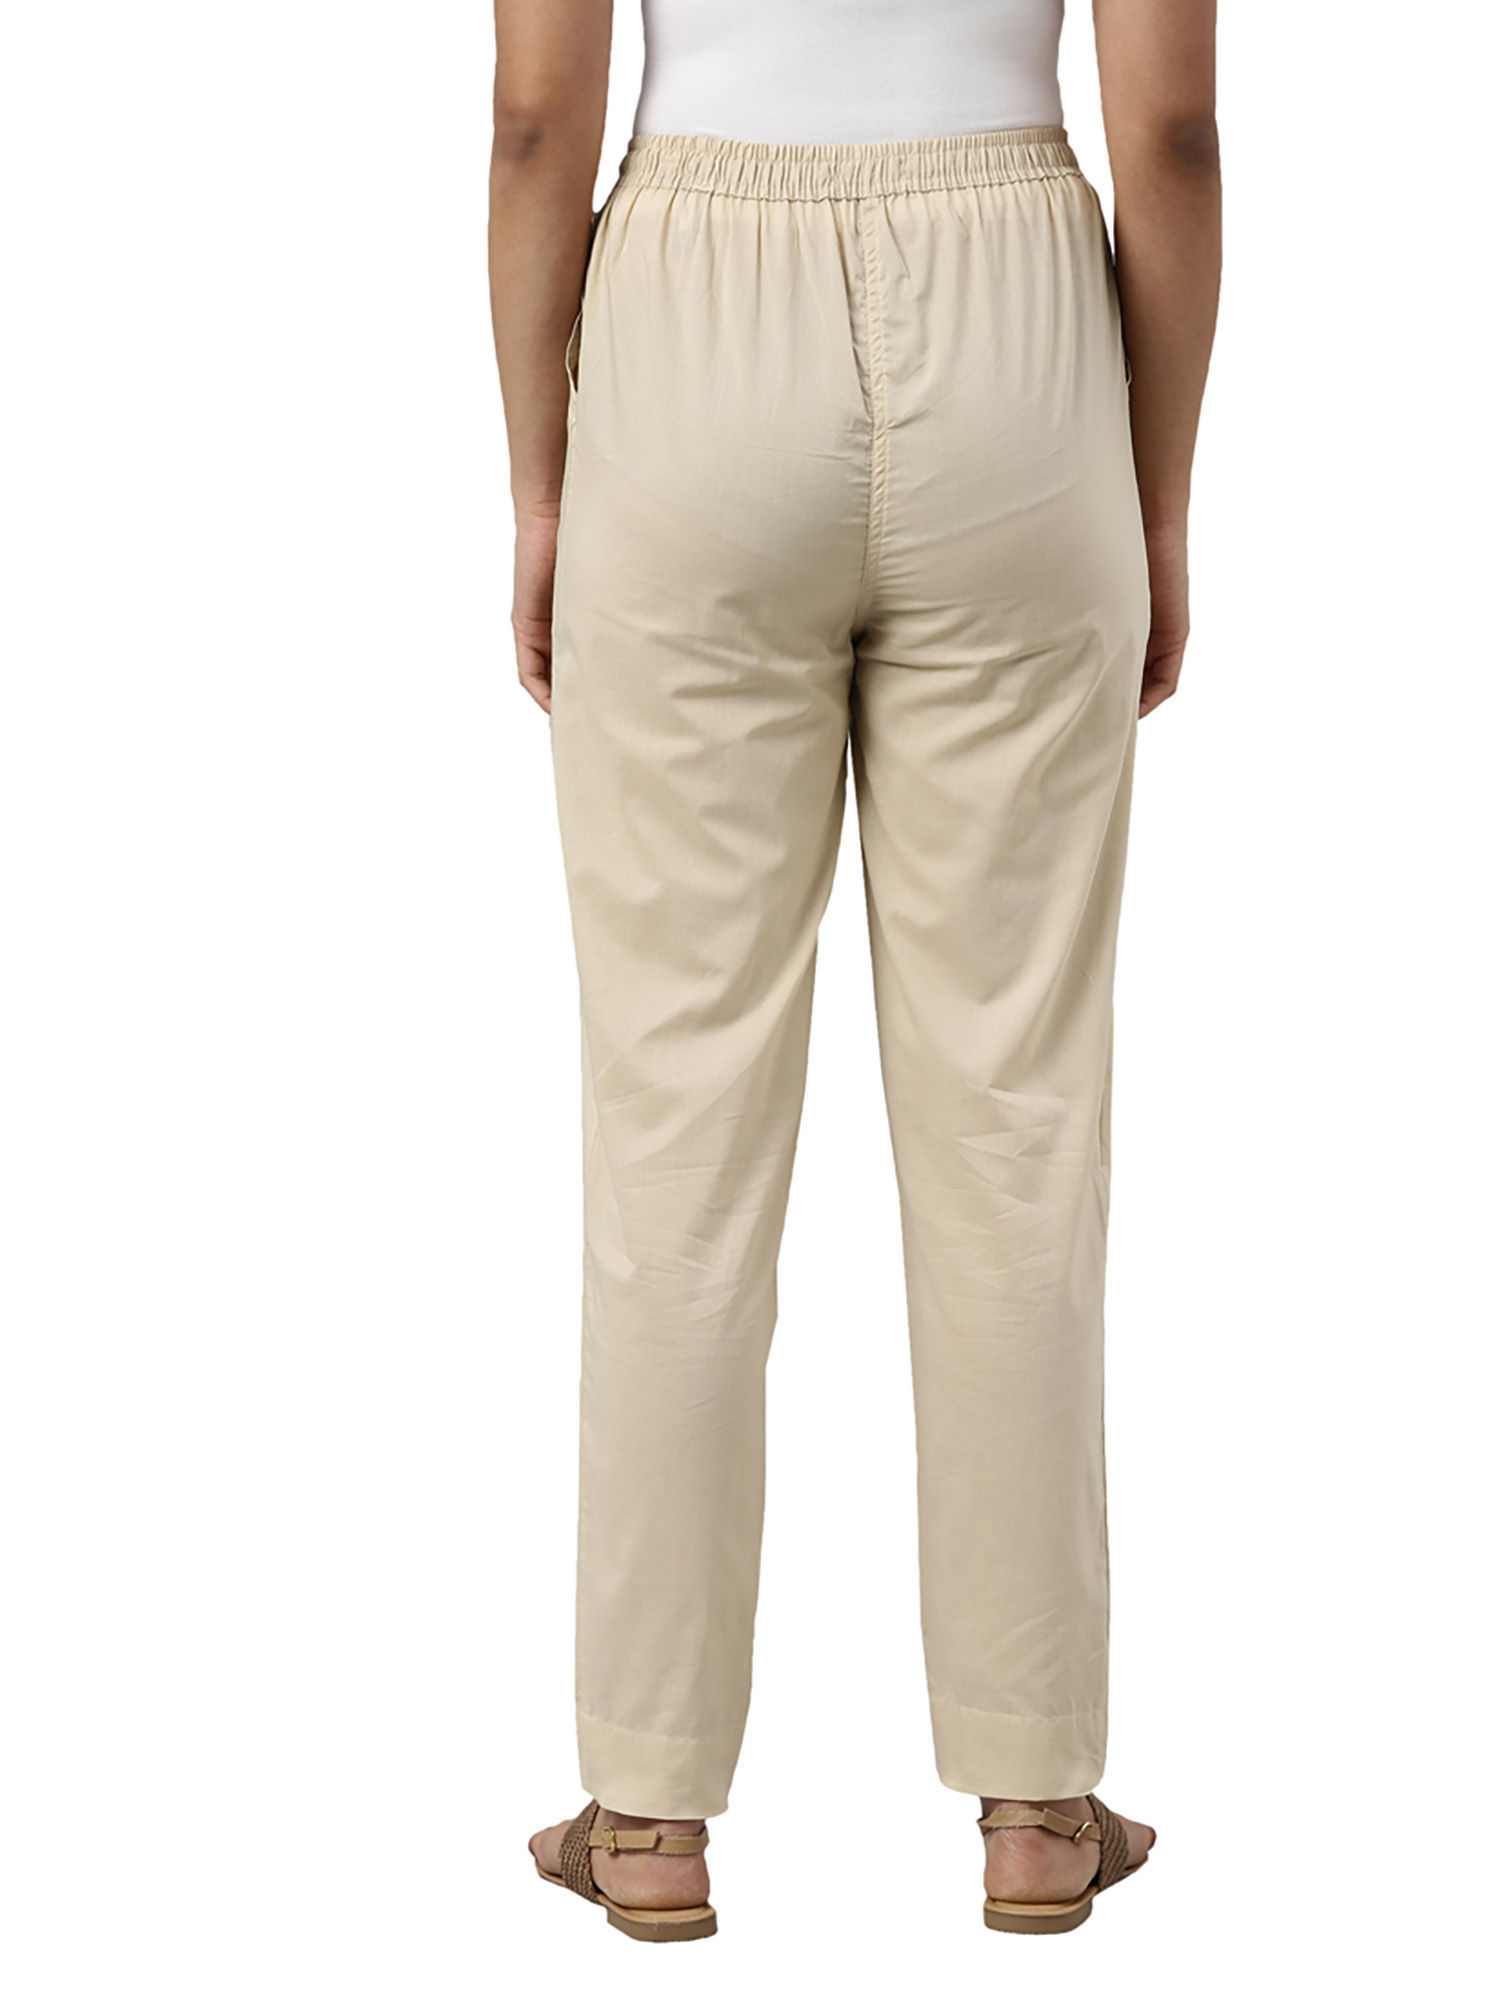 Buy Go Colors Women Solid Wheat Mid Rise Cotton Pants Online